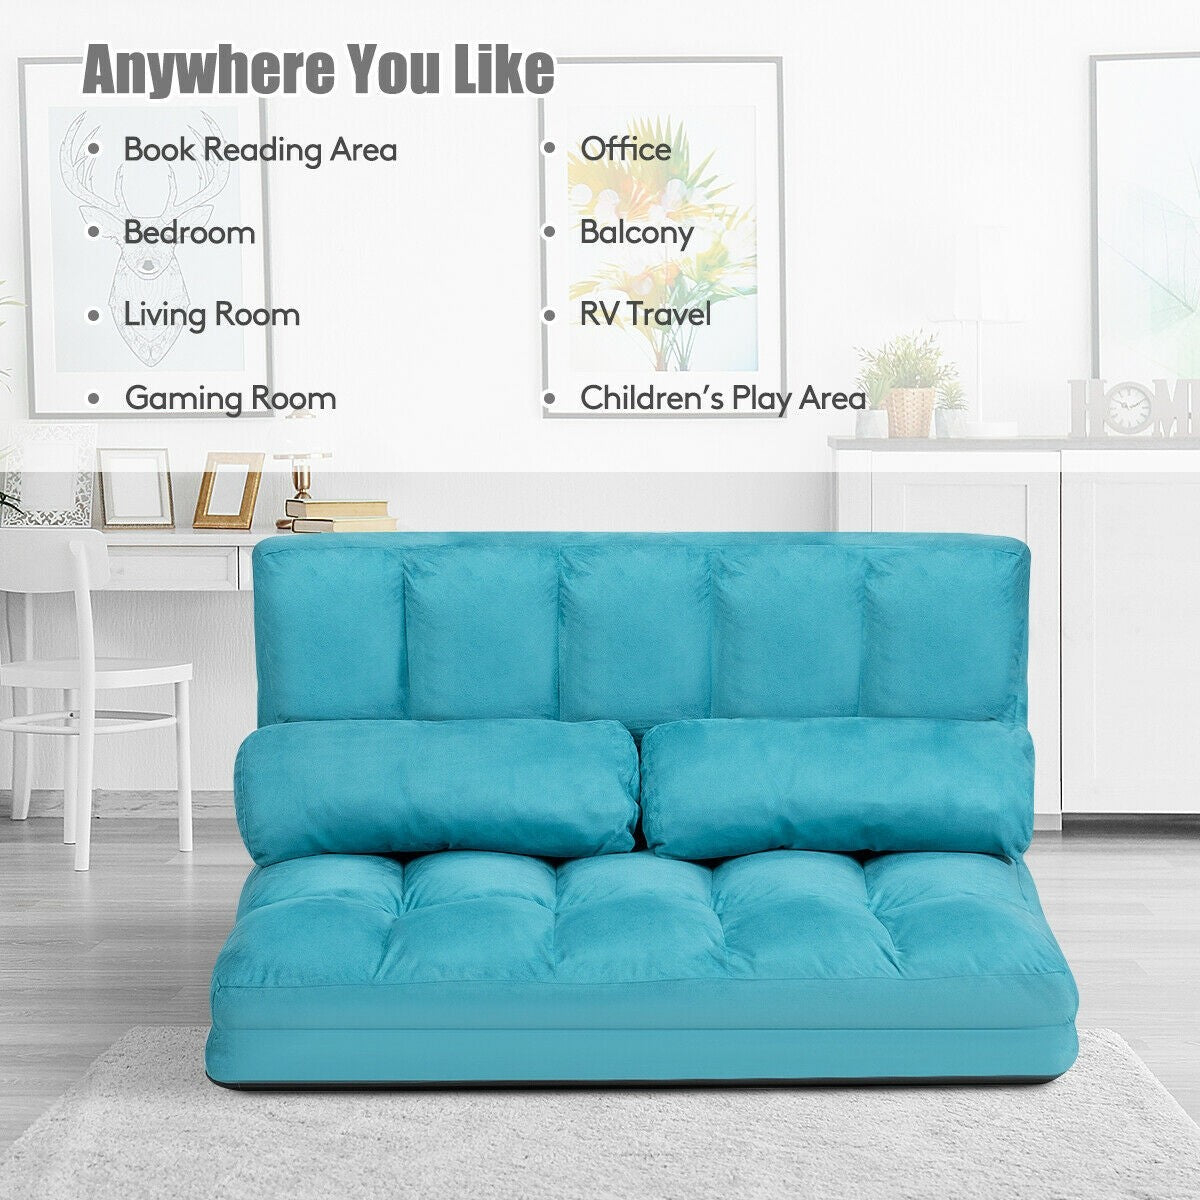 Adjustable Floor Sofa, Foldable Lazy Sofa Sleeper Bed 6-Position Adjustable,2 Pillows - Giantexus